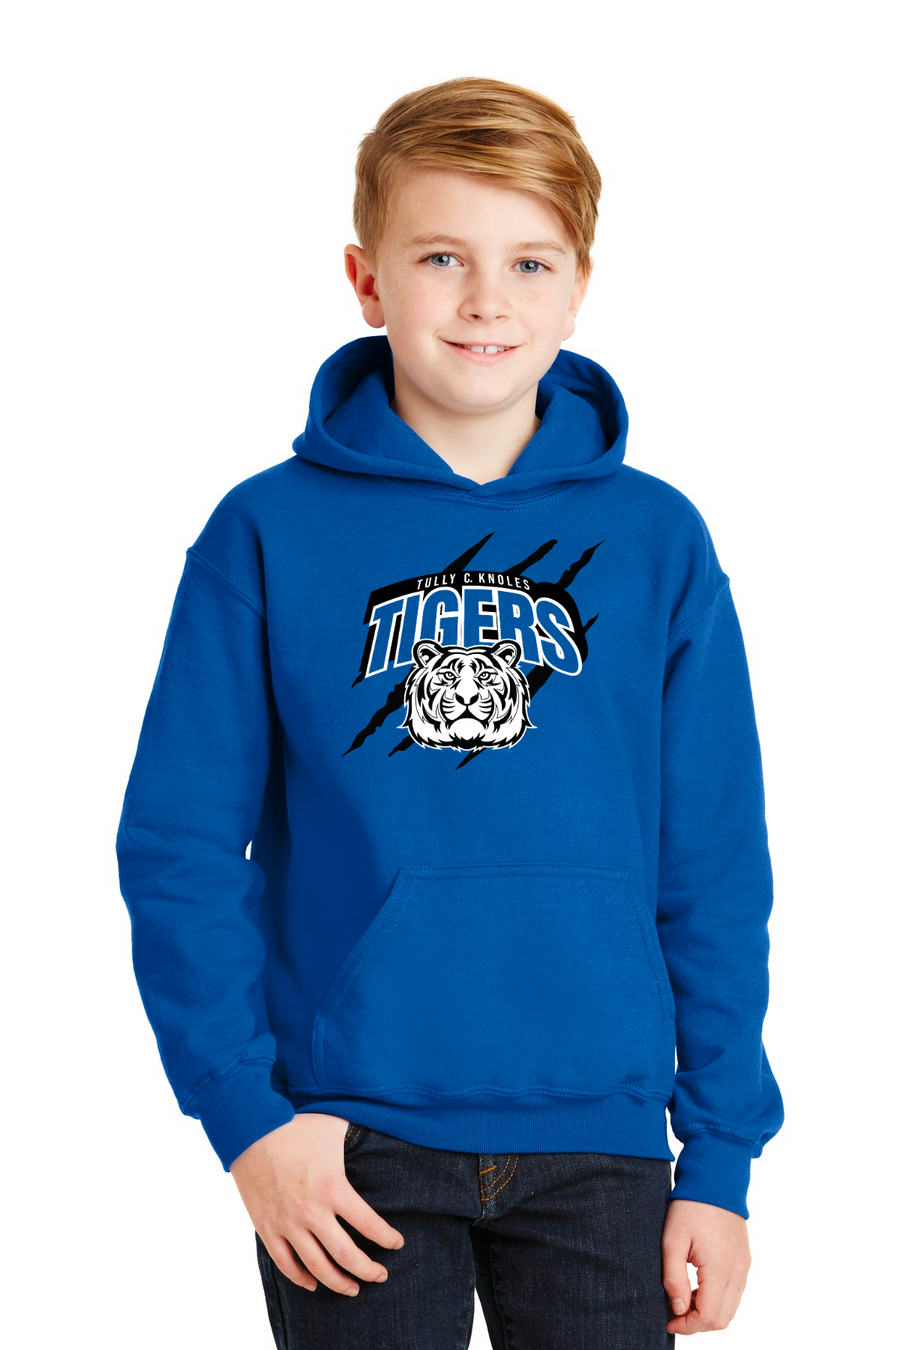 Tully C Knoles - Spirit Wear 23/24 On-Demand-Unisex Hoodie Tiger Logo